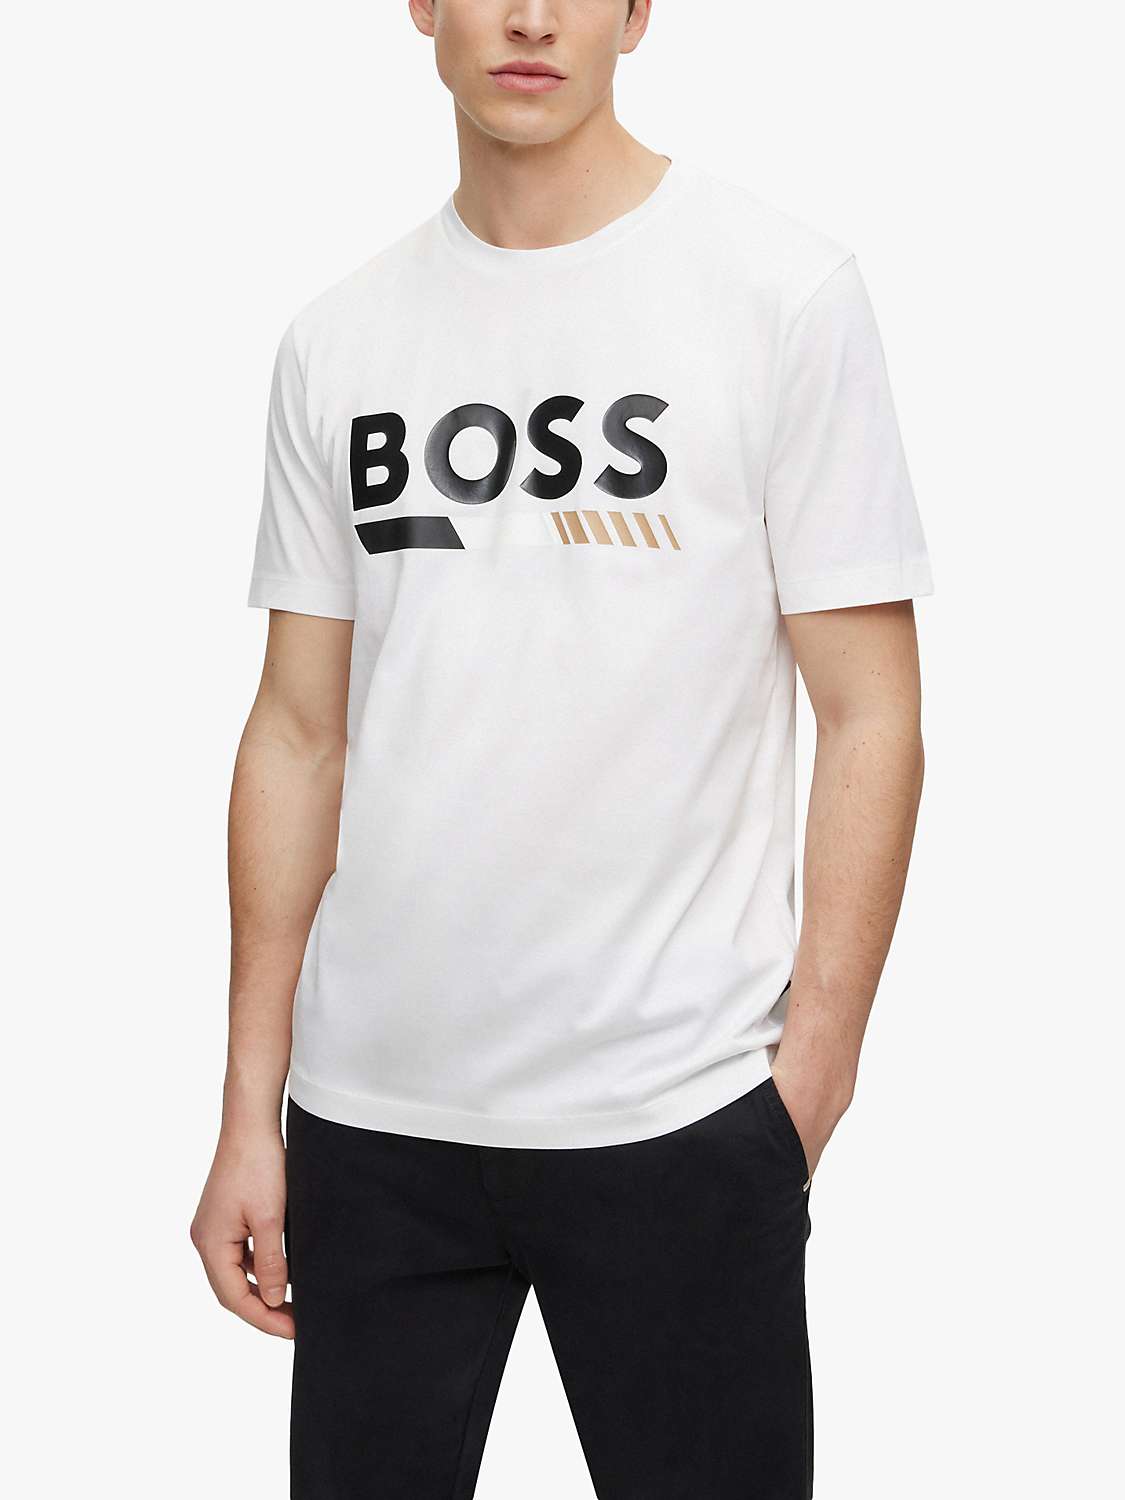 BOSS Tiburt 410 T-Shirt, White at John Lewis & Partners